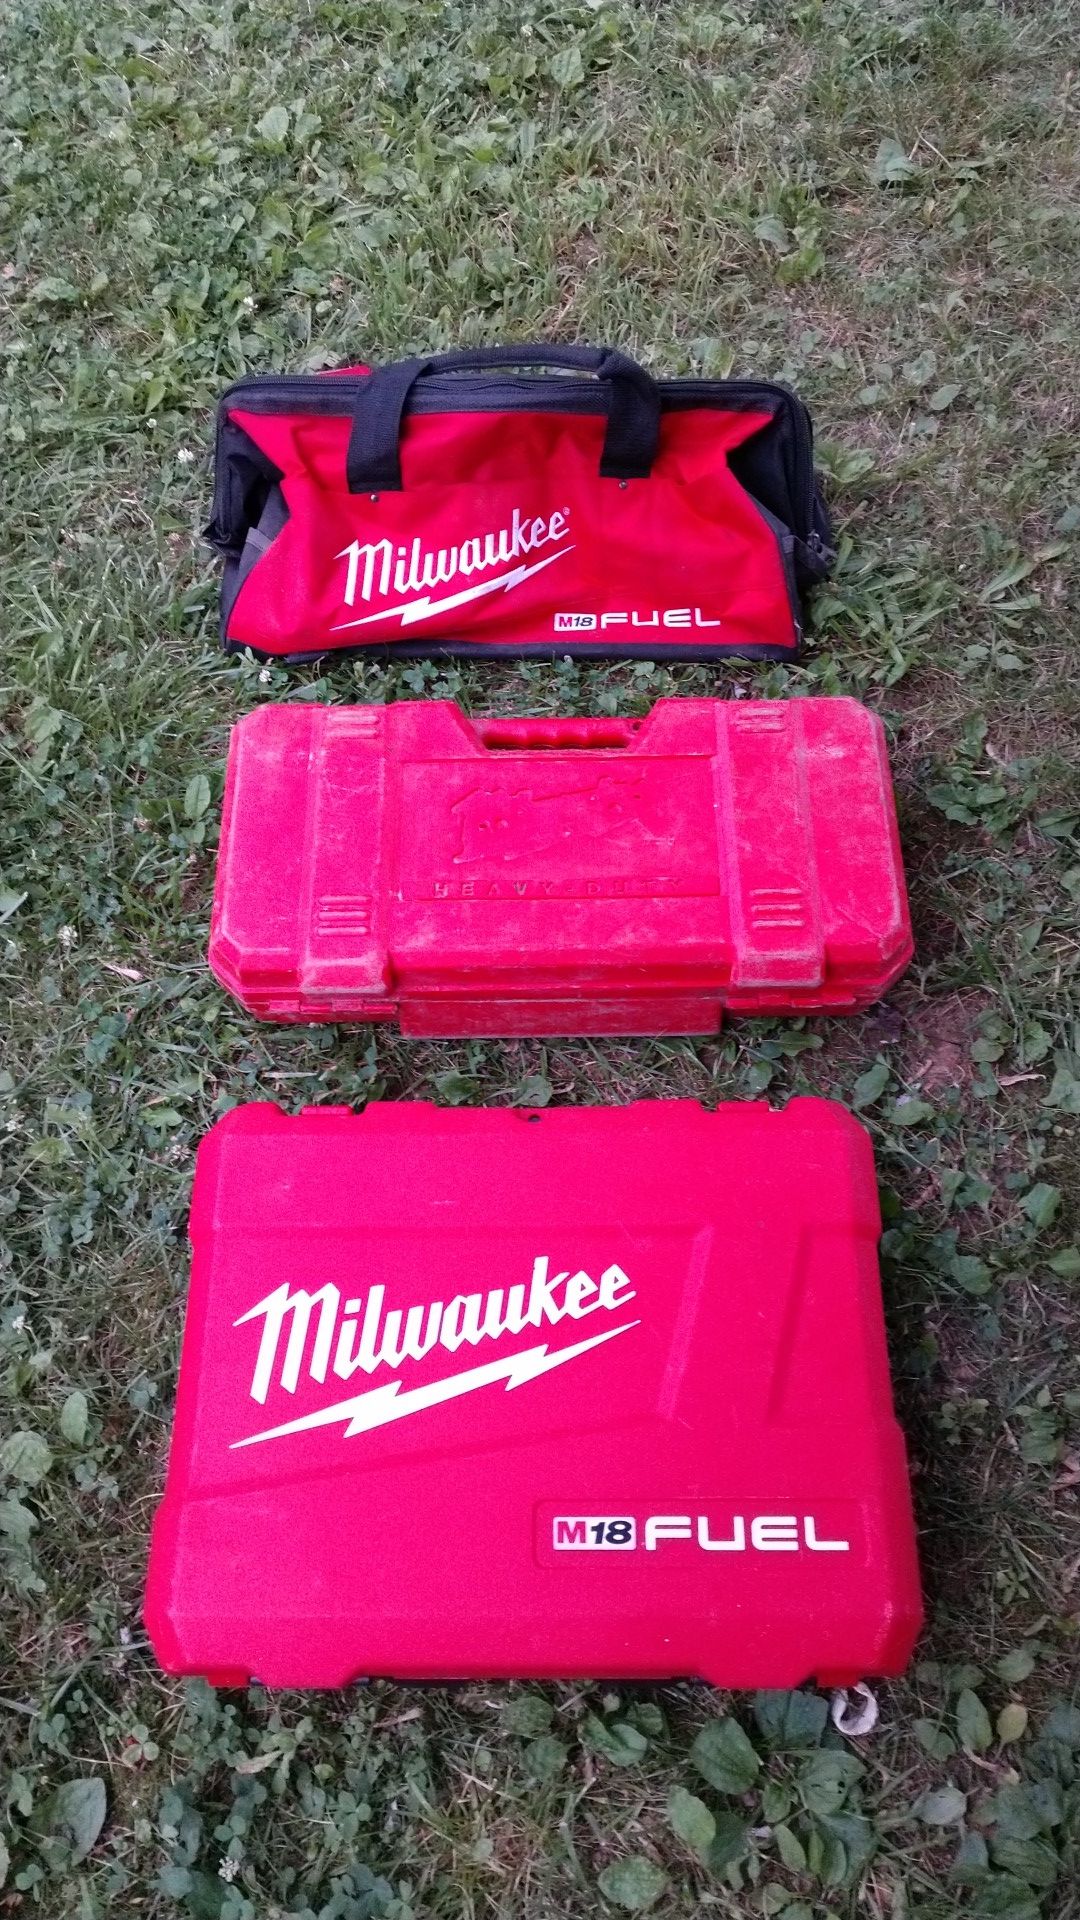 Milwaukee hard cases and power tool bag